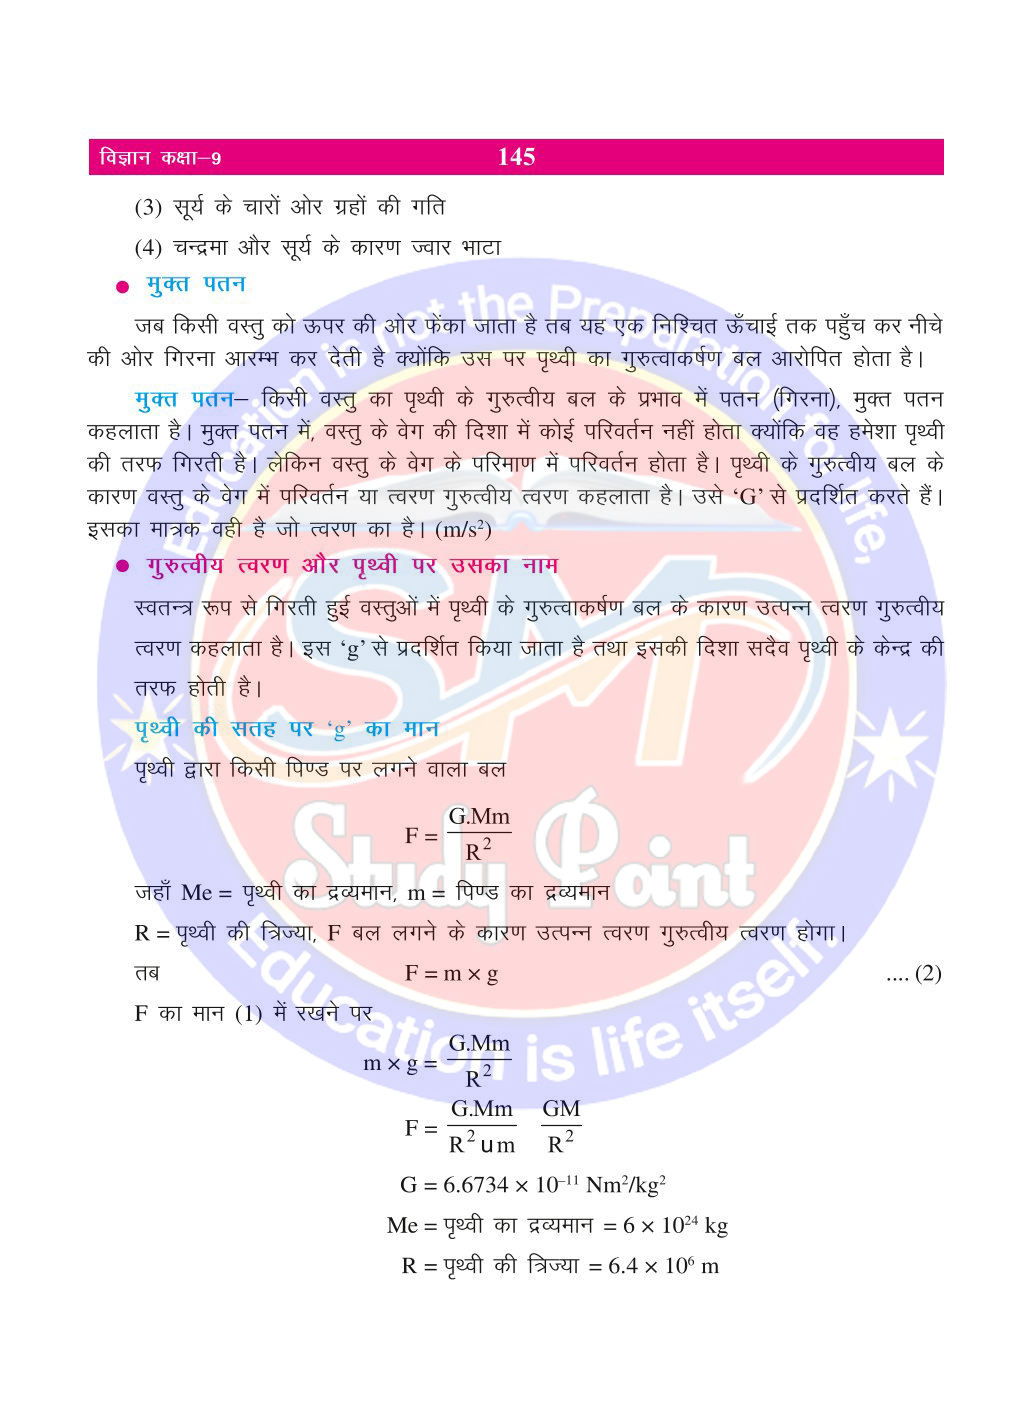 Bihar Board Class 9th Physics | Gravity | Class 9 Physics Rivision Notes PDF | गुरुत्वाकर्षण | बिहार बोर्ड क्लास 9वीं भौतिकी नोट्स | कक्षा 9 भौतिकी हिंदी में नोट्स